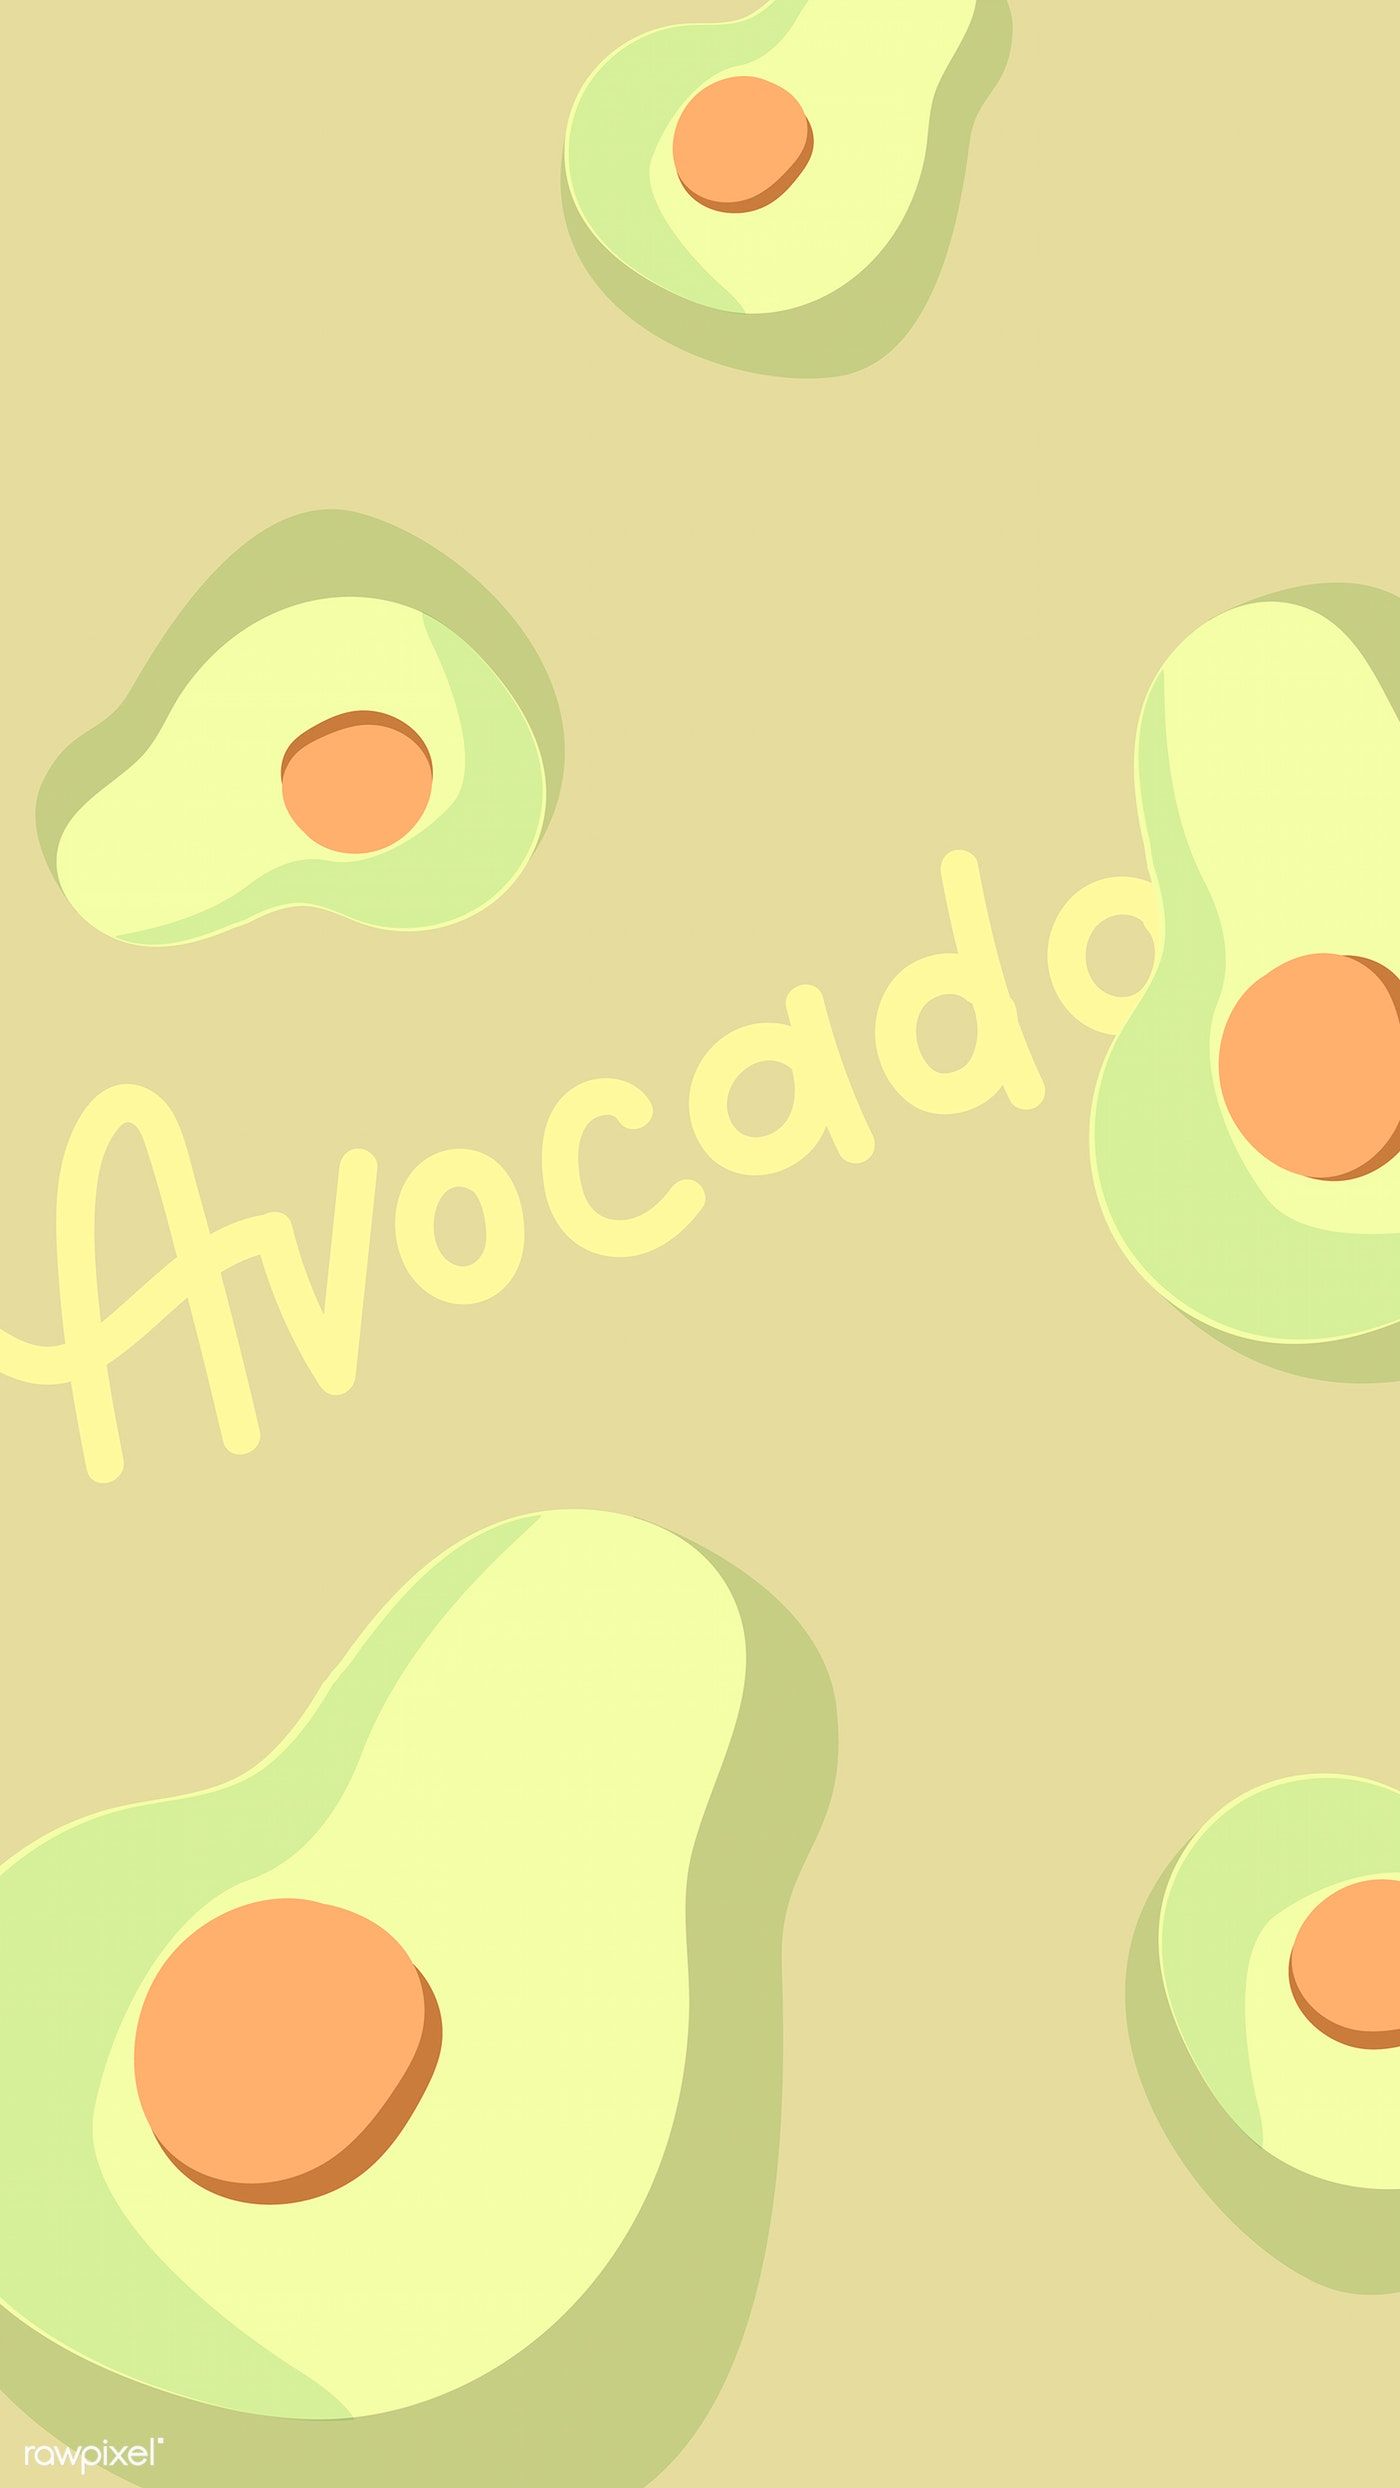 Half avocados background vector. free image / Techi. Wallpaper iphone cute, Kawaii wallpaper, Cute avocado